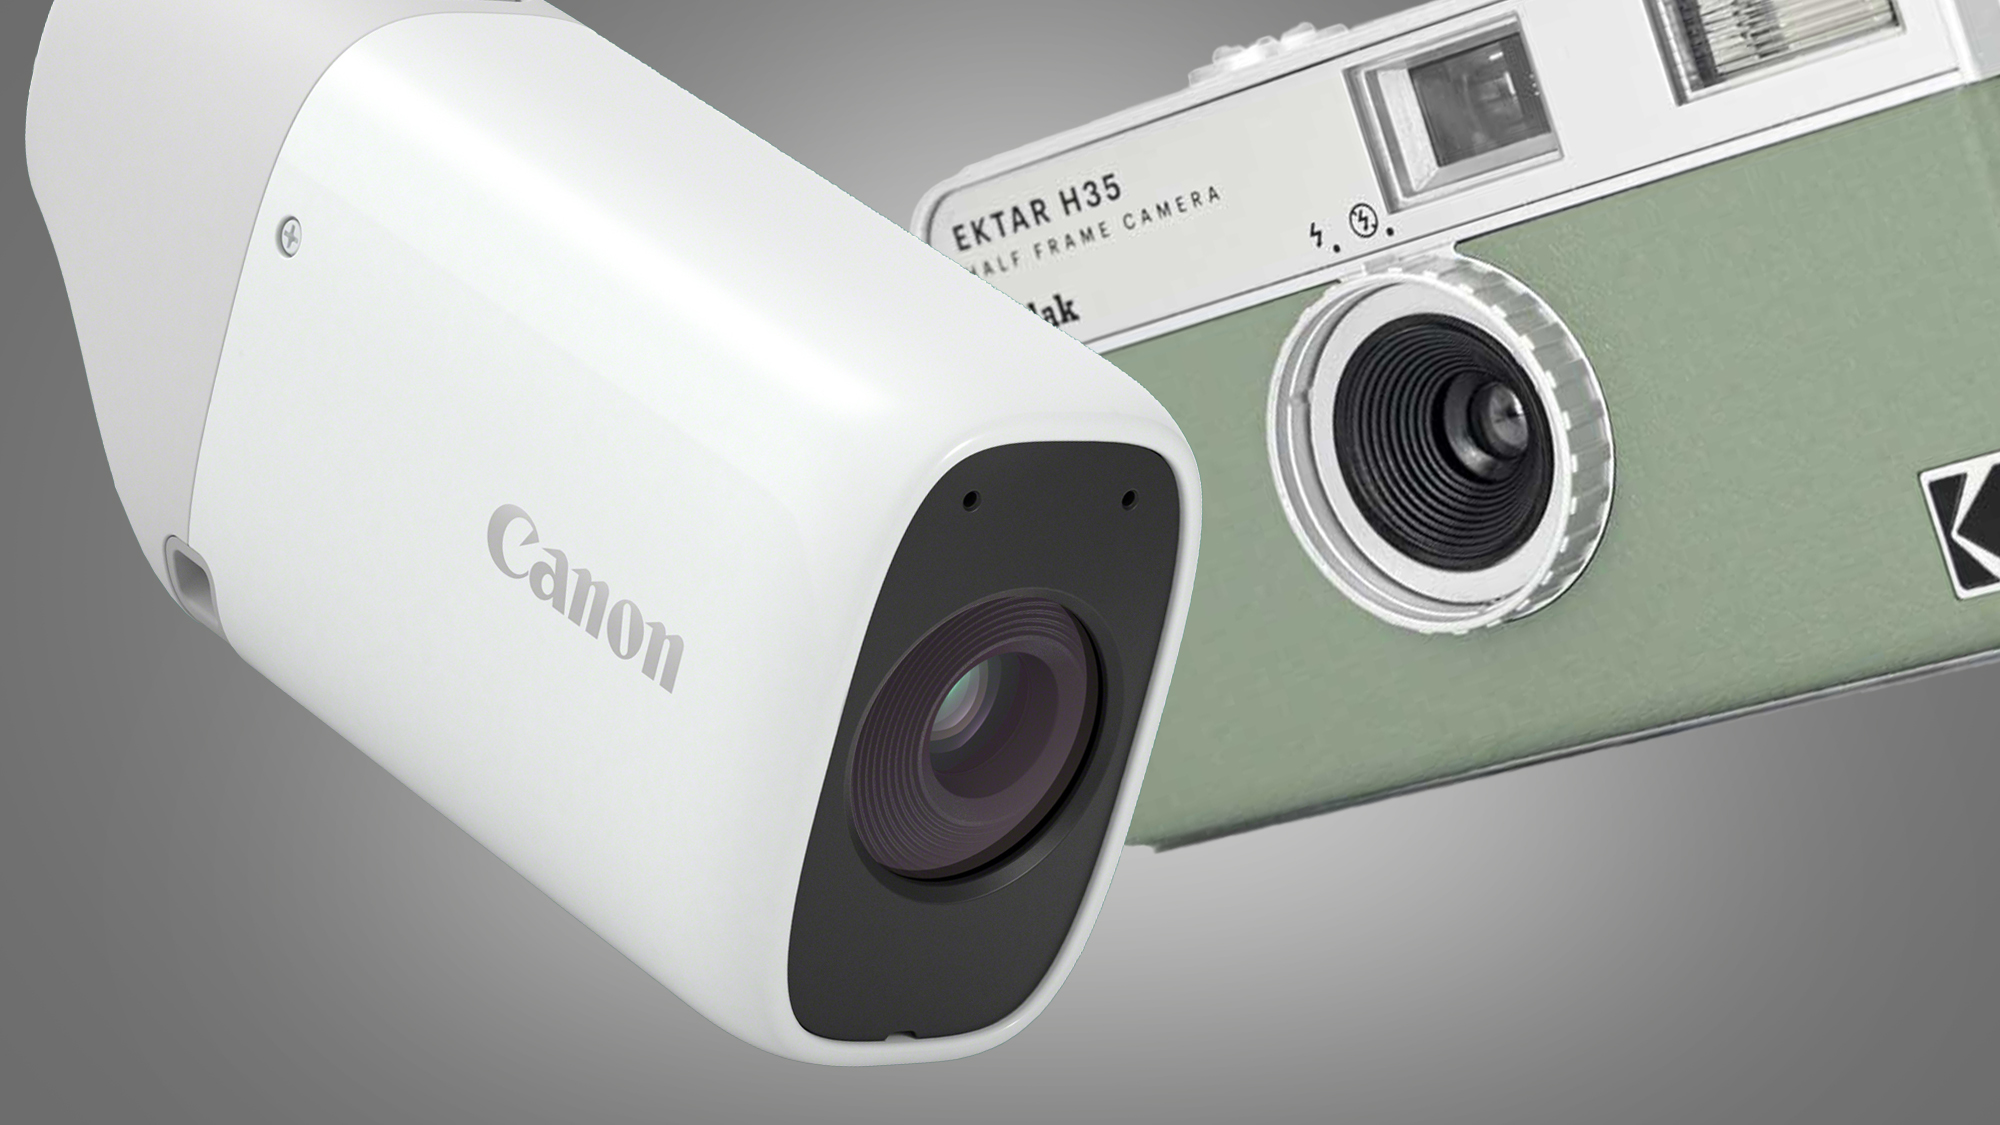 Kamera saku Canon PowerShot Zoom dan Kodak Ektar H35 dengan latar belakang abu-abu